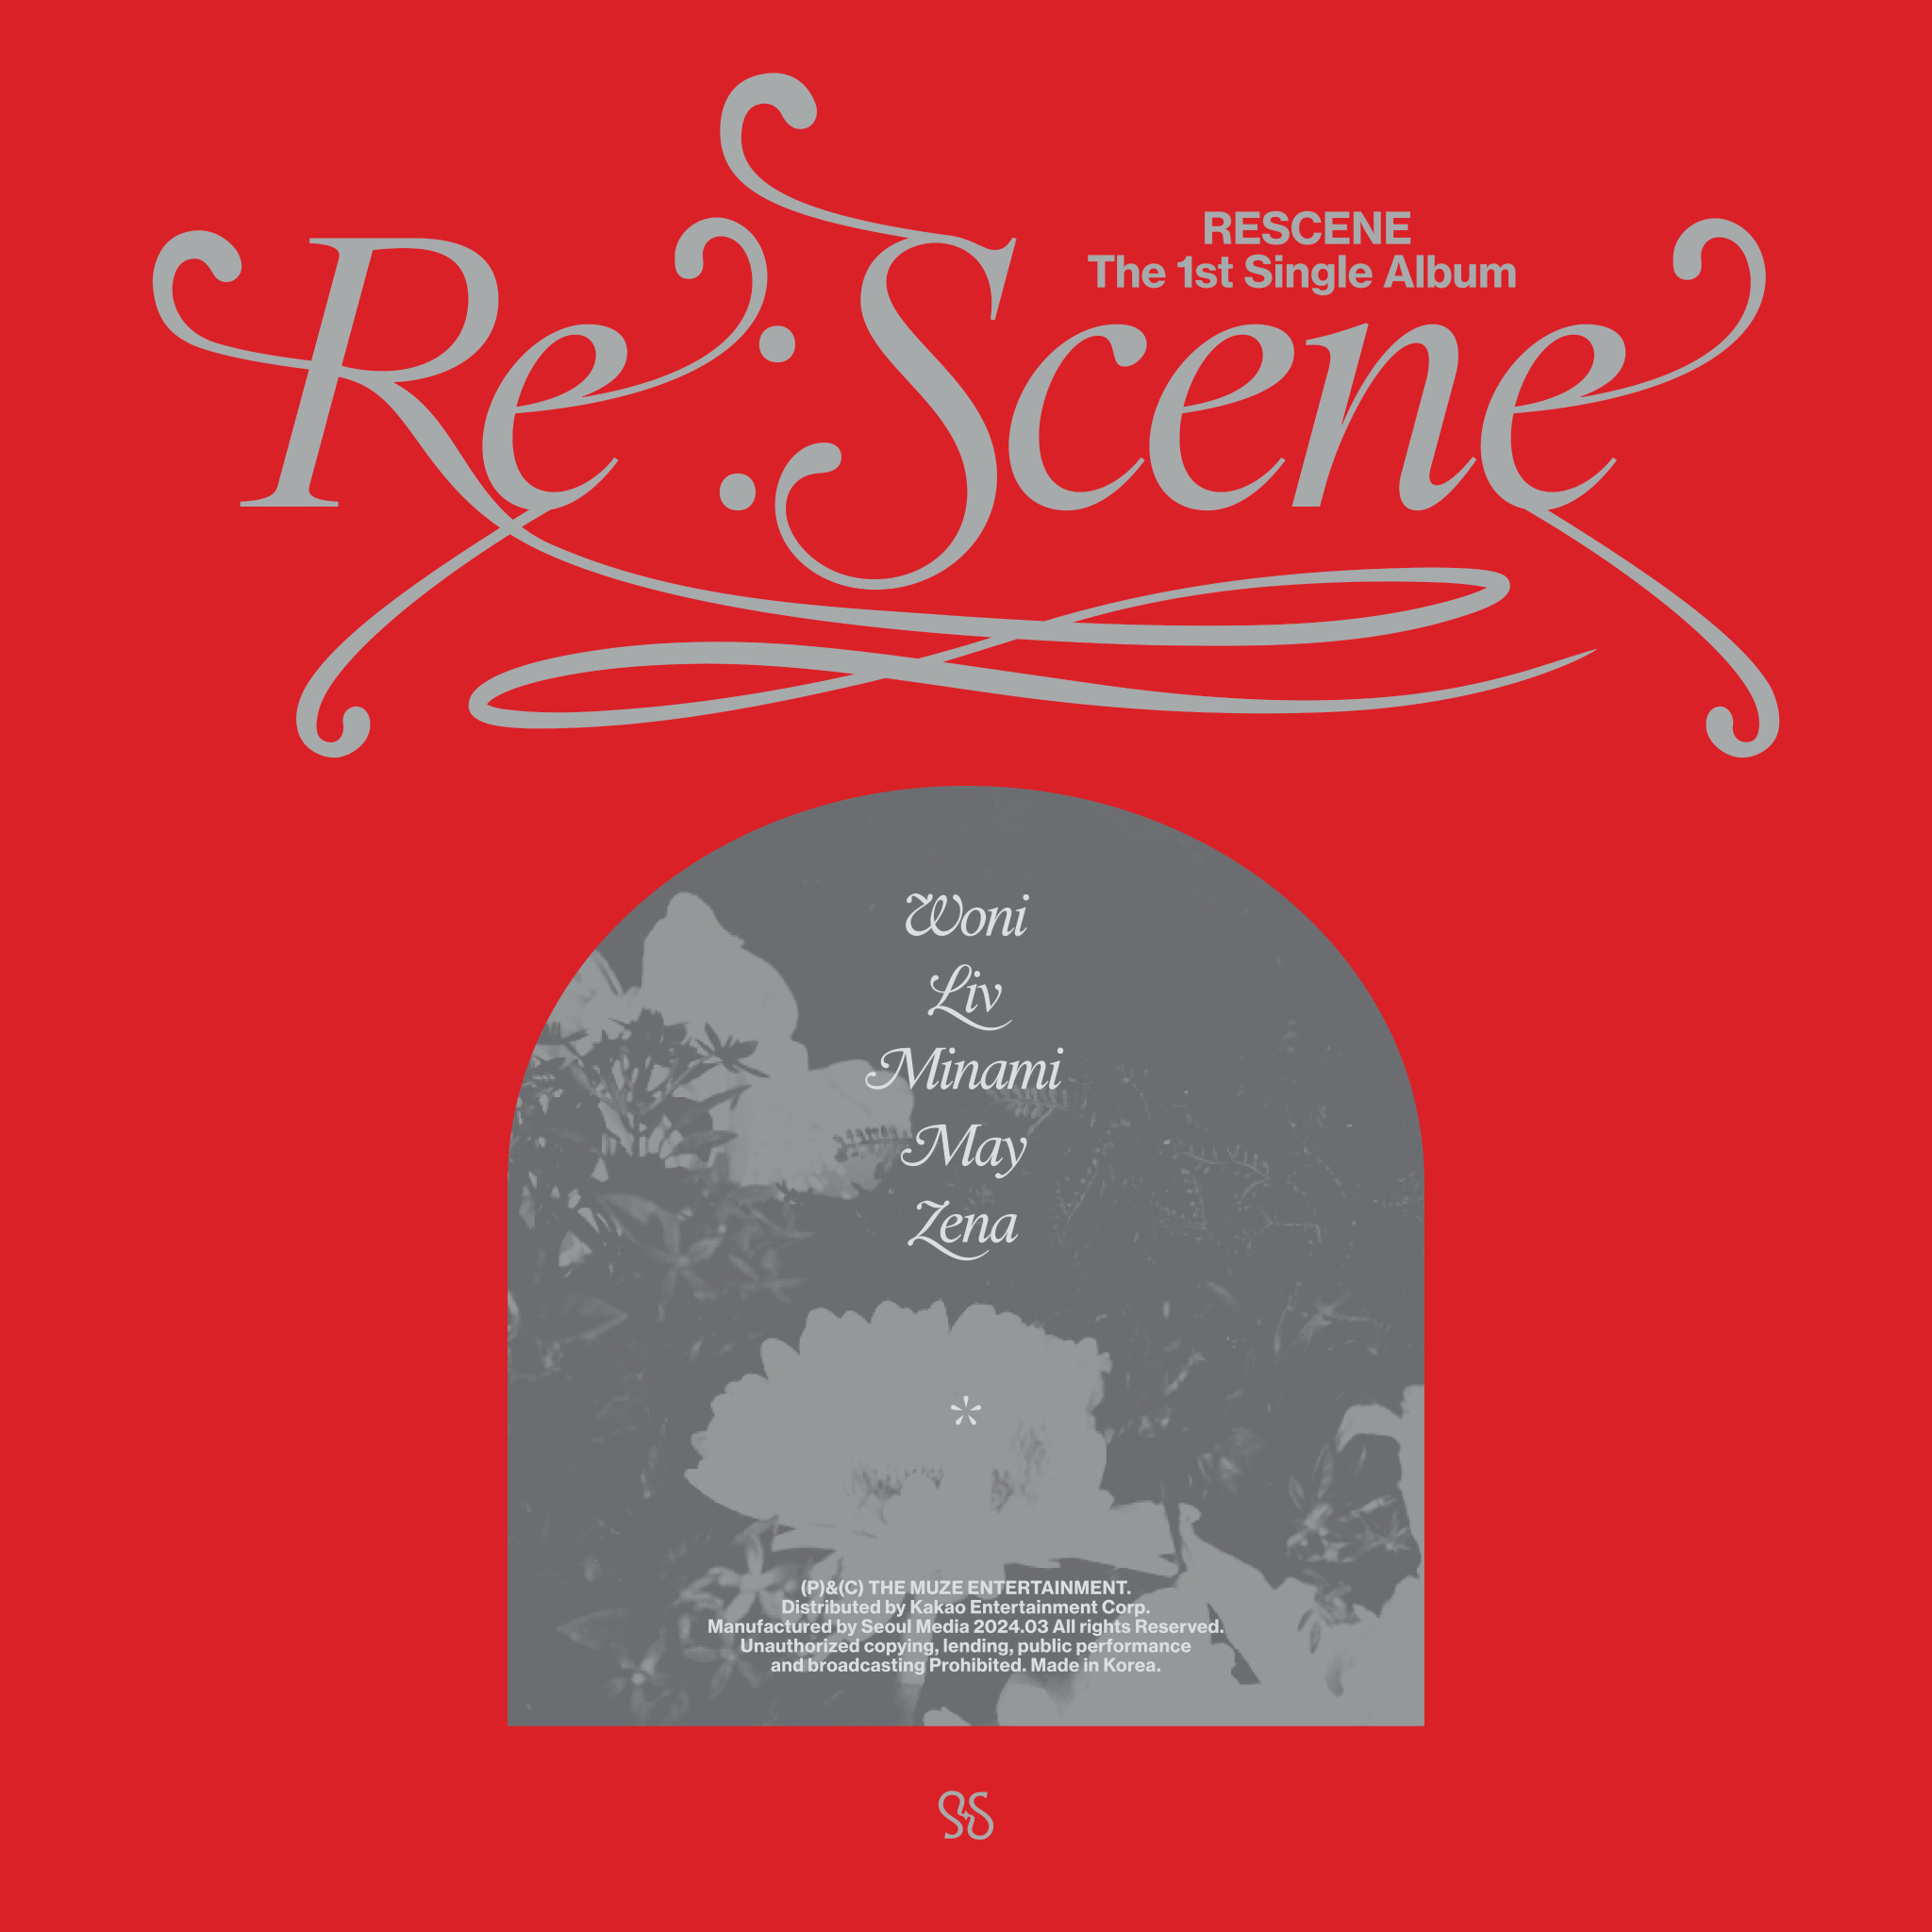 RESCENE Re:Scene - The 1st Single Album cover artwork